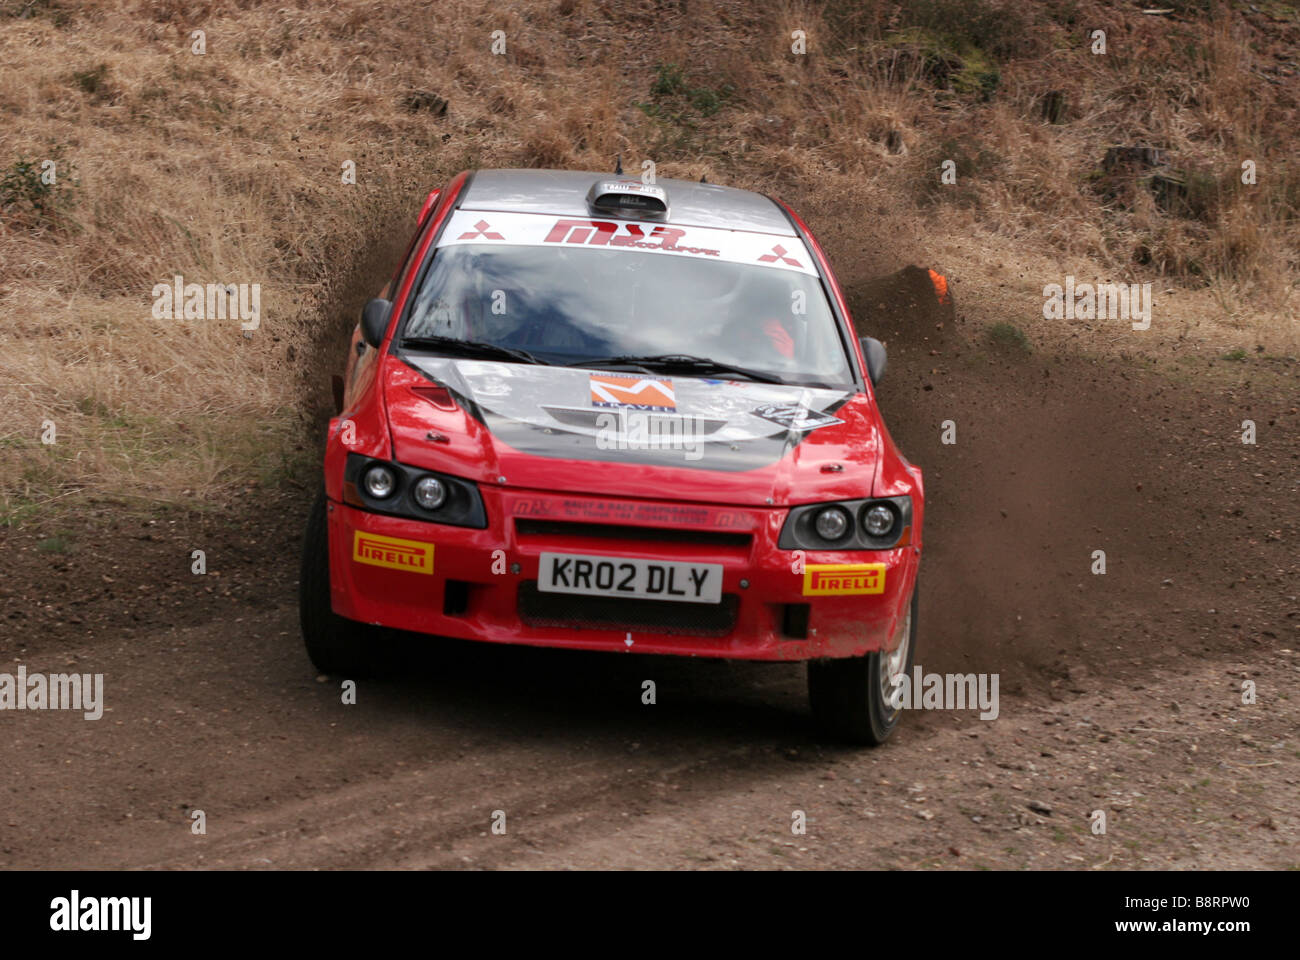 Photo d'action de voiture de Rallye Rallye proforming à Sunseeker 2009 Banque D'Images